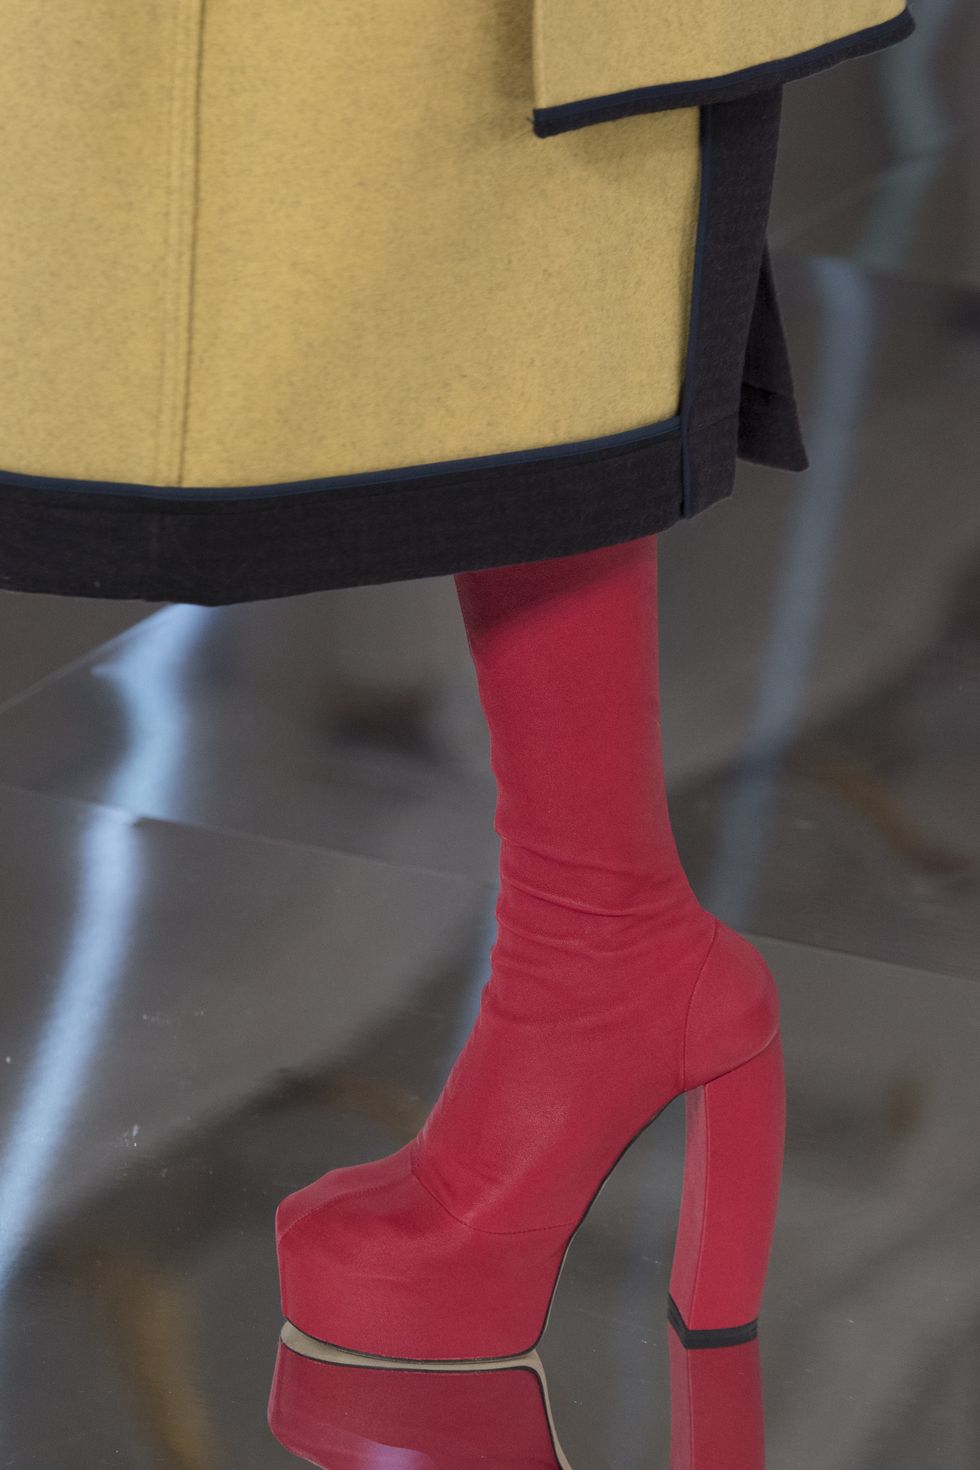 Footwear, Red, Leg, Shoe, Pink, High heels, Fashion, Joint, Haute couture, Human leg, 